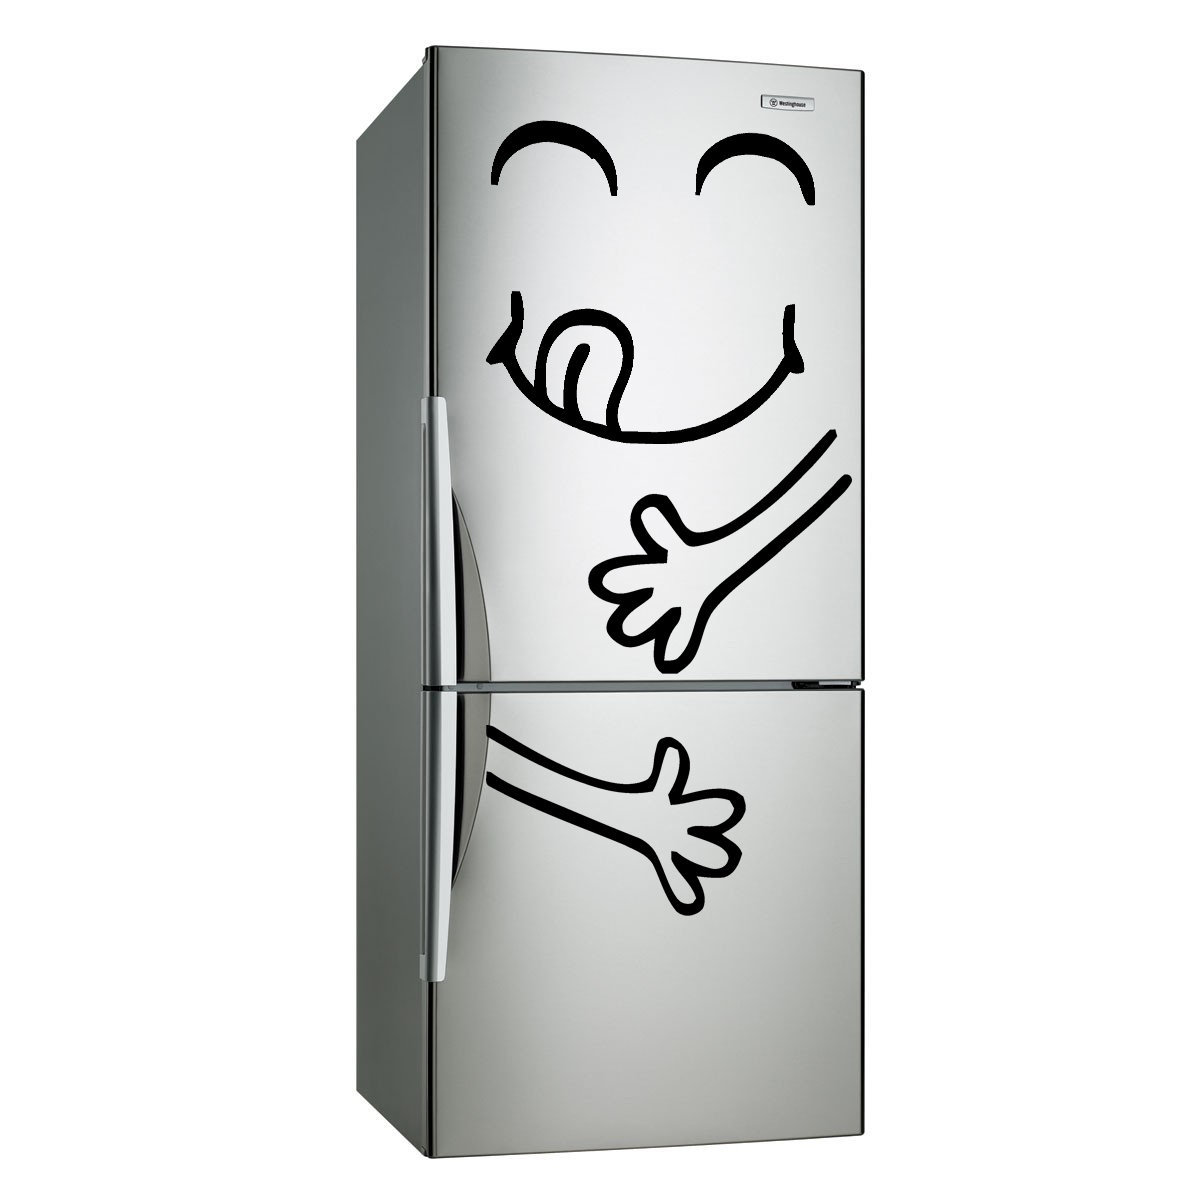 Coole Lion Kühlschrank Aufkleber Tür Abdeckung Kühlschrank Selbst